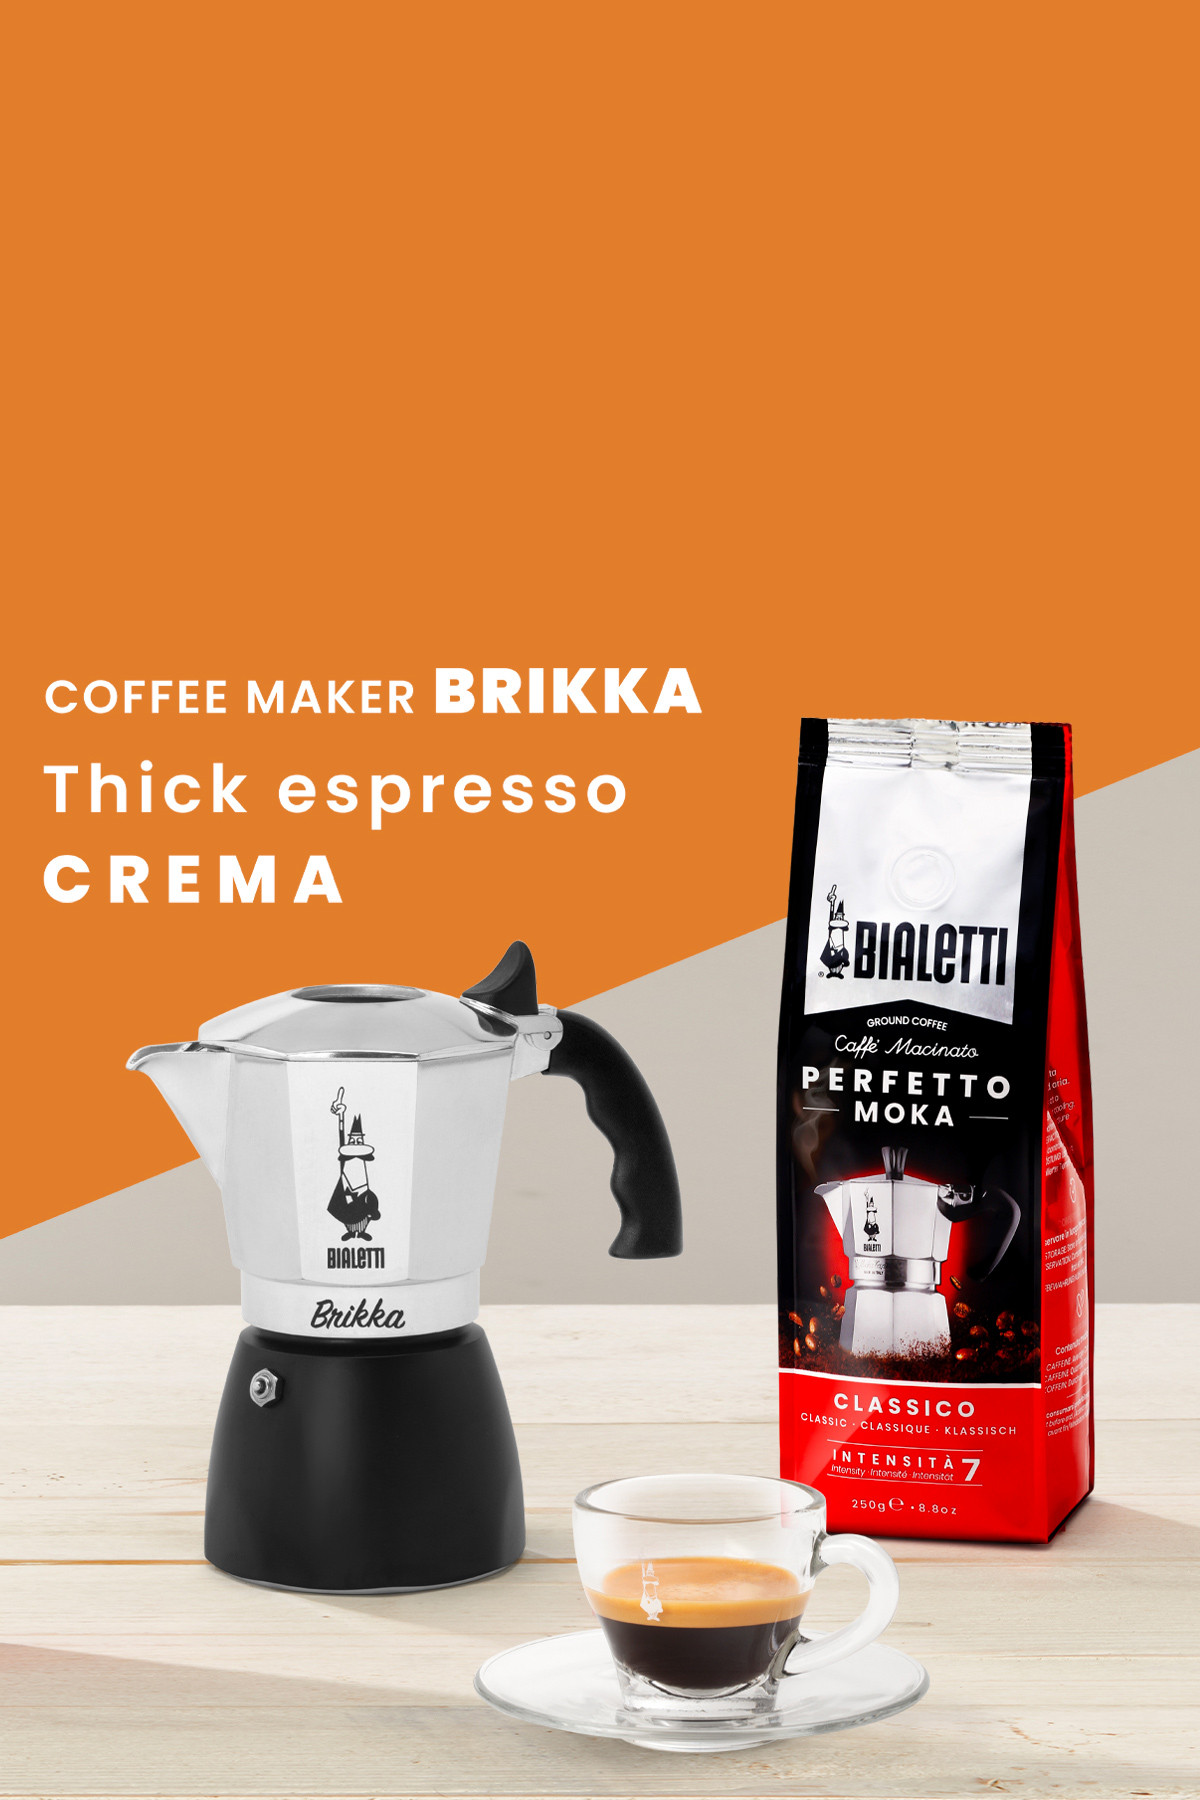 https://media.heirol.fi/587312_7/1200/bialetti-brikka-2-cups-new_.jpg